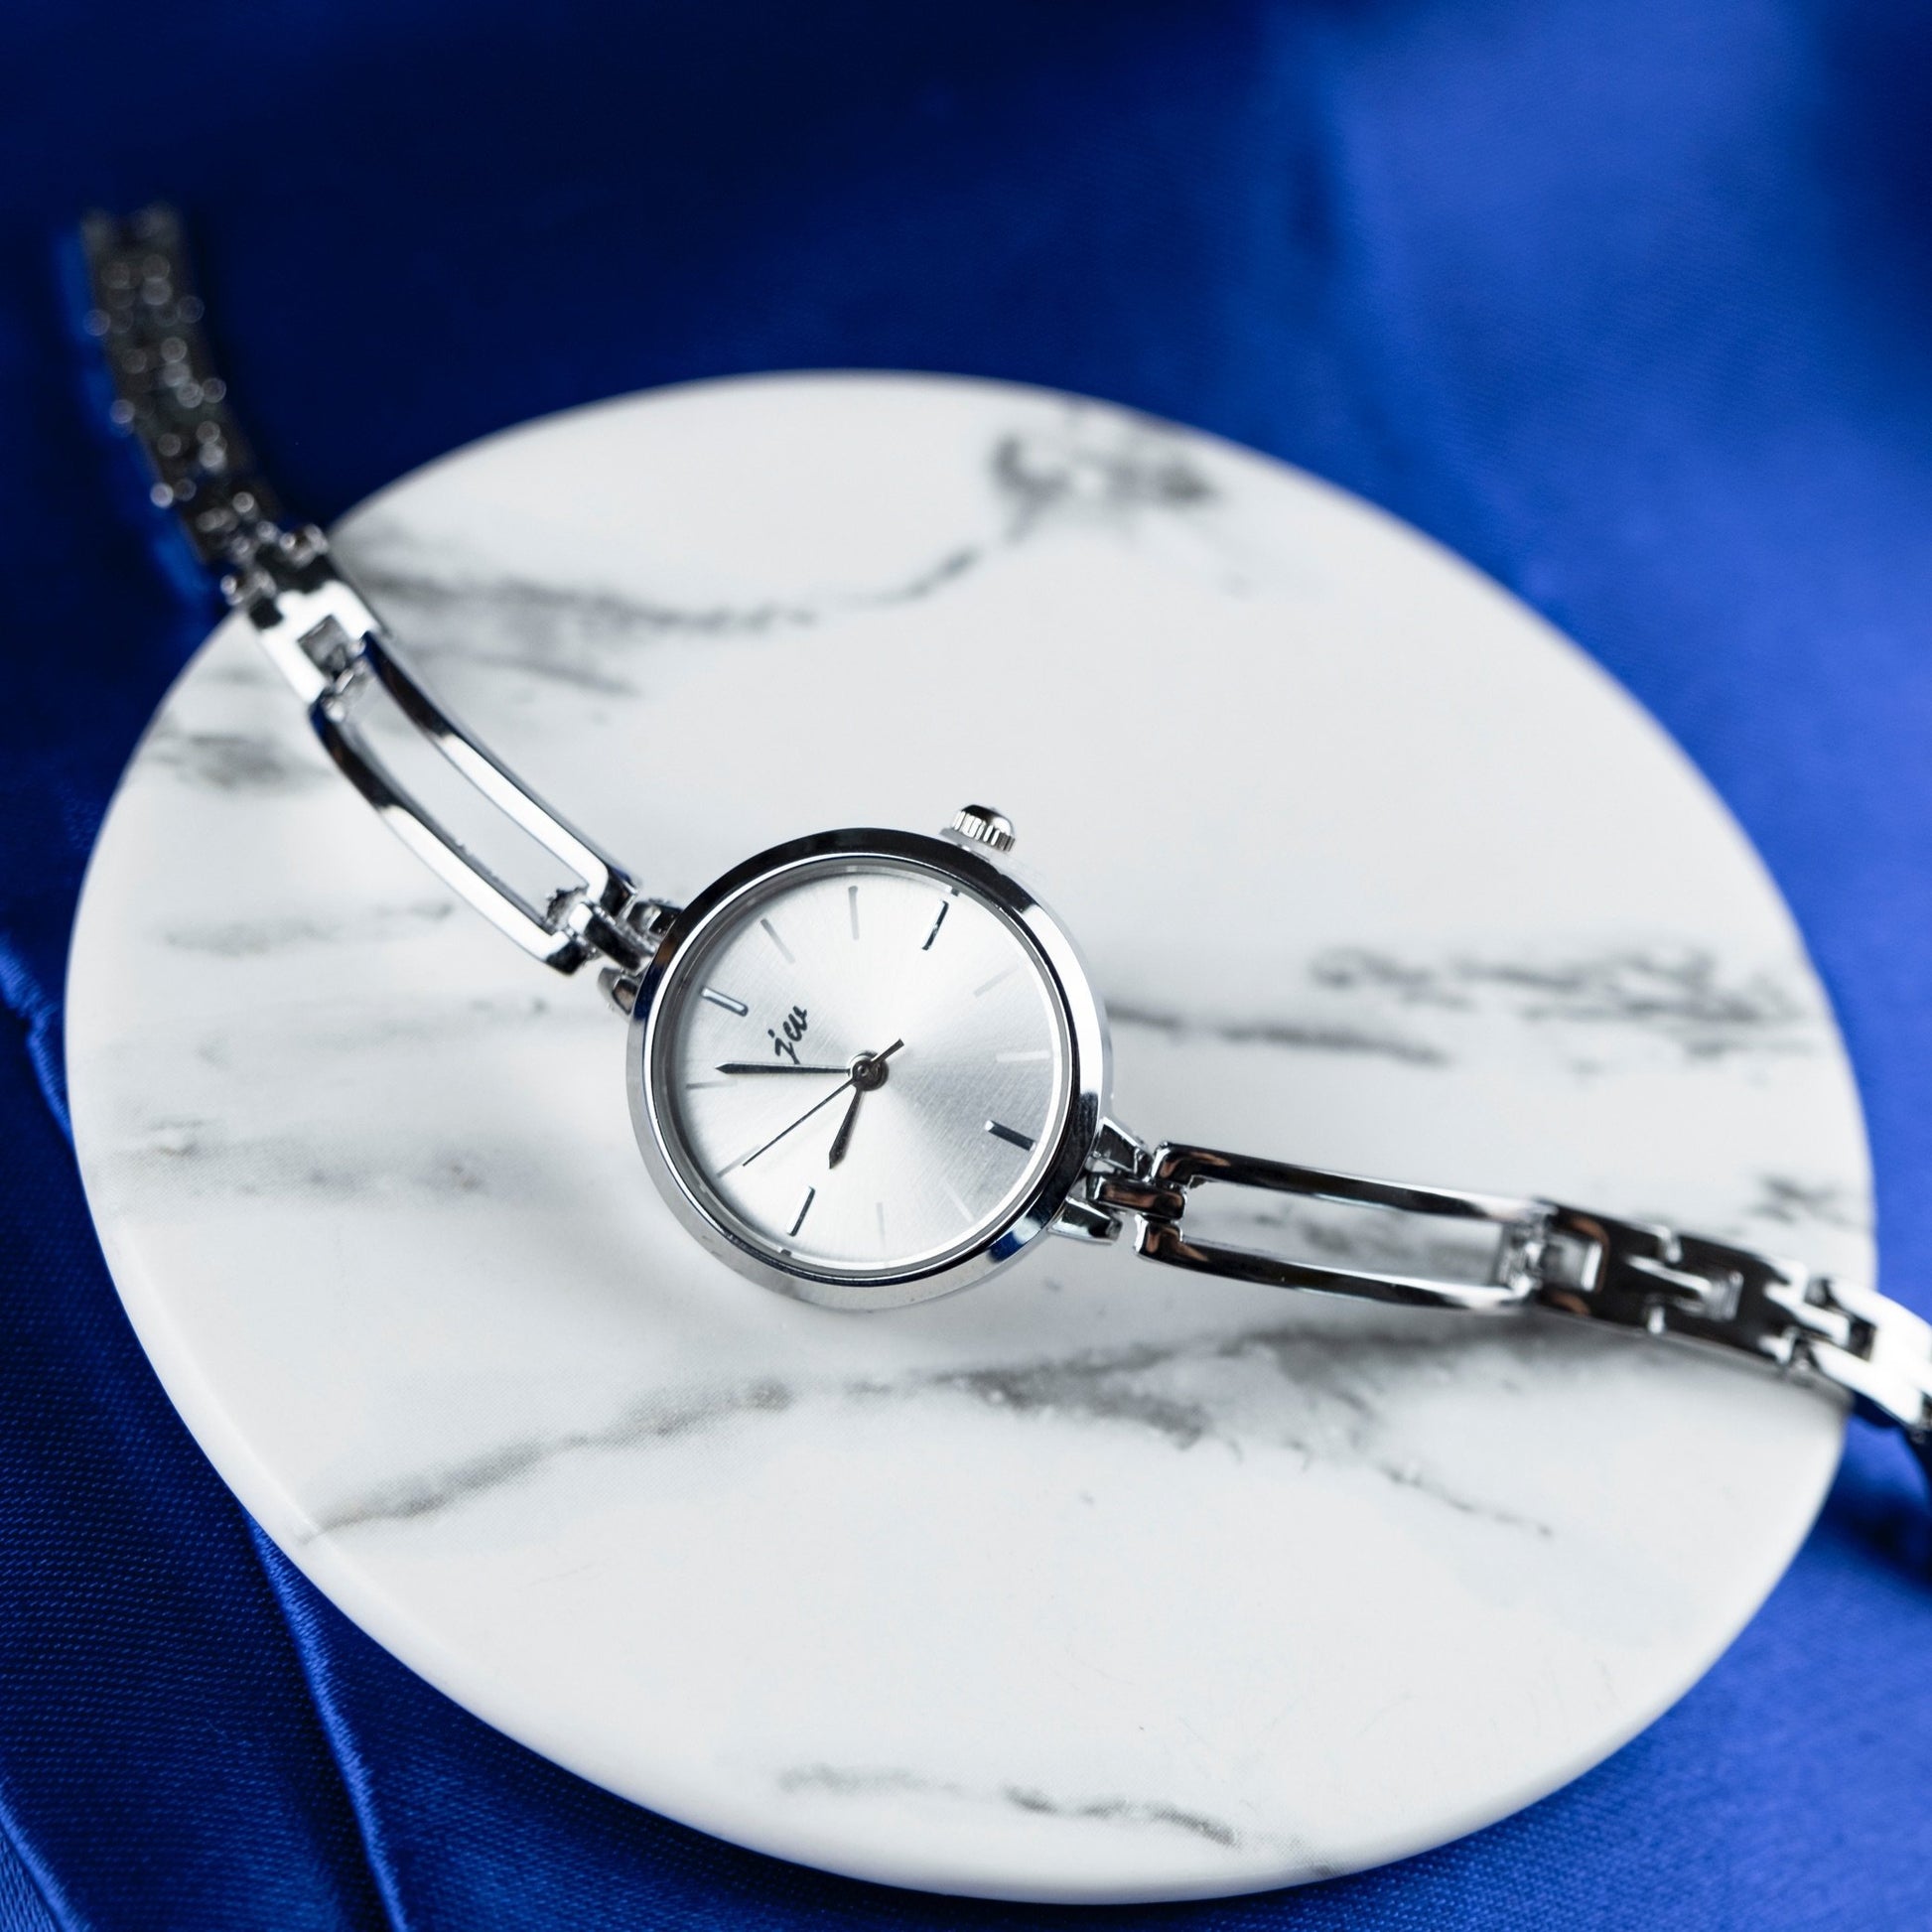 Silver Steel Metal White Dial Elegant Party Bangle Adjustable Bracelet Watch